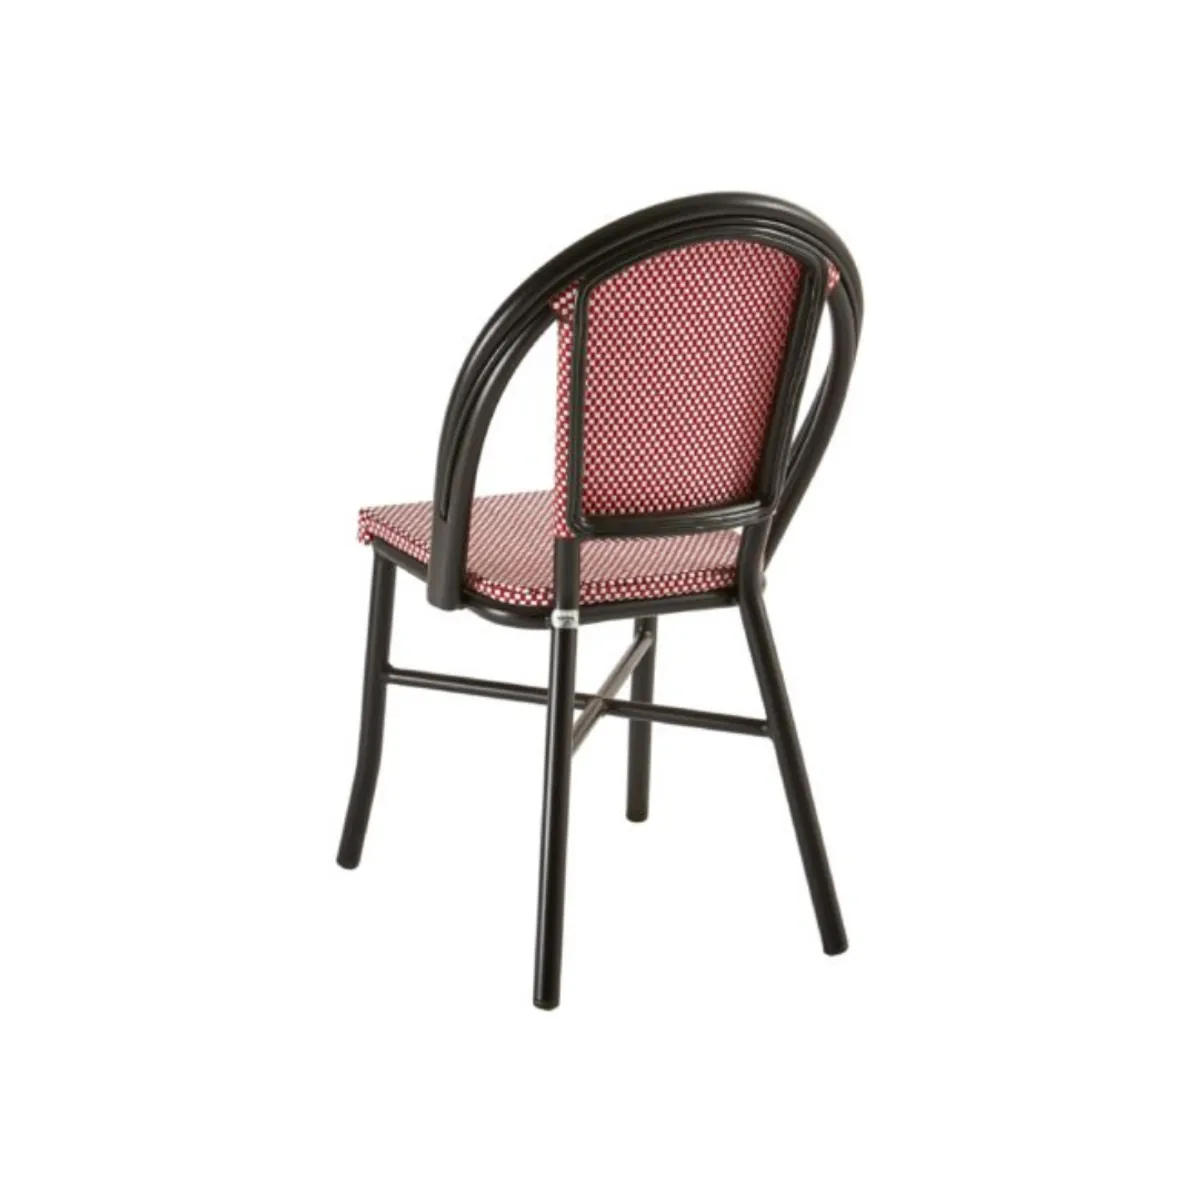 Cahill side chair 2